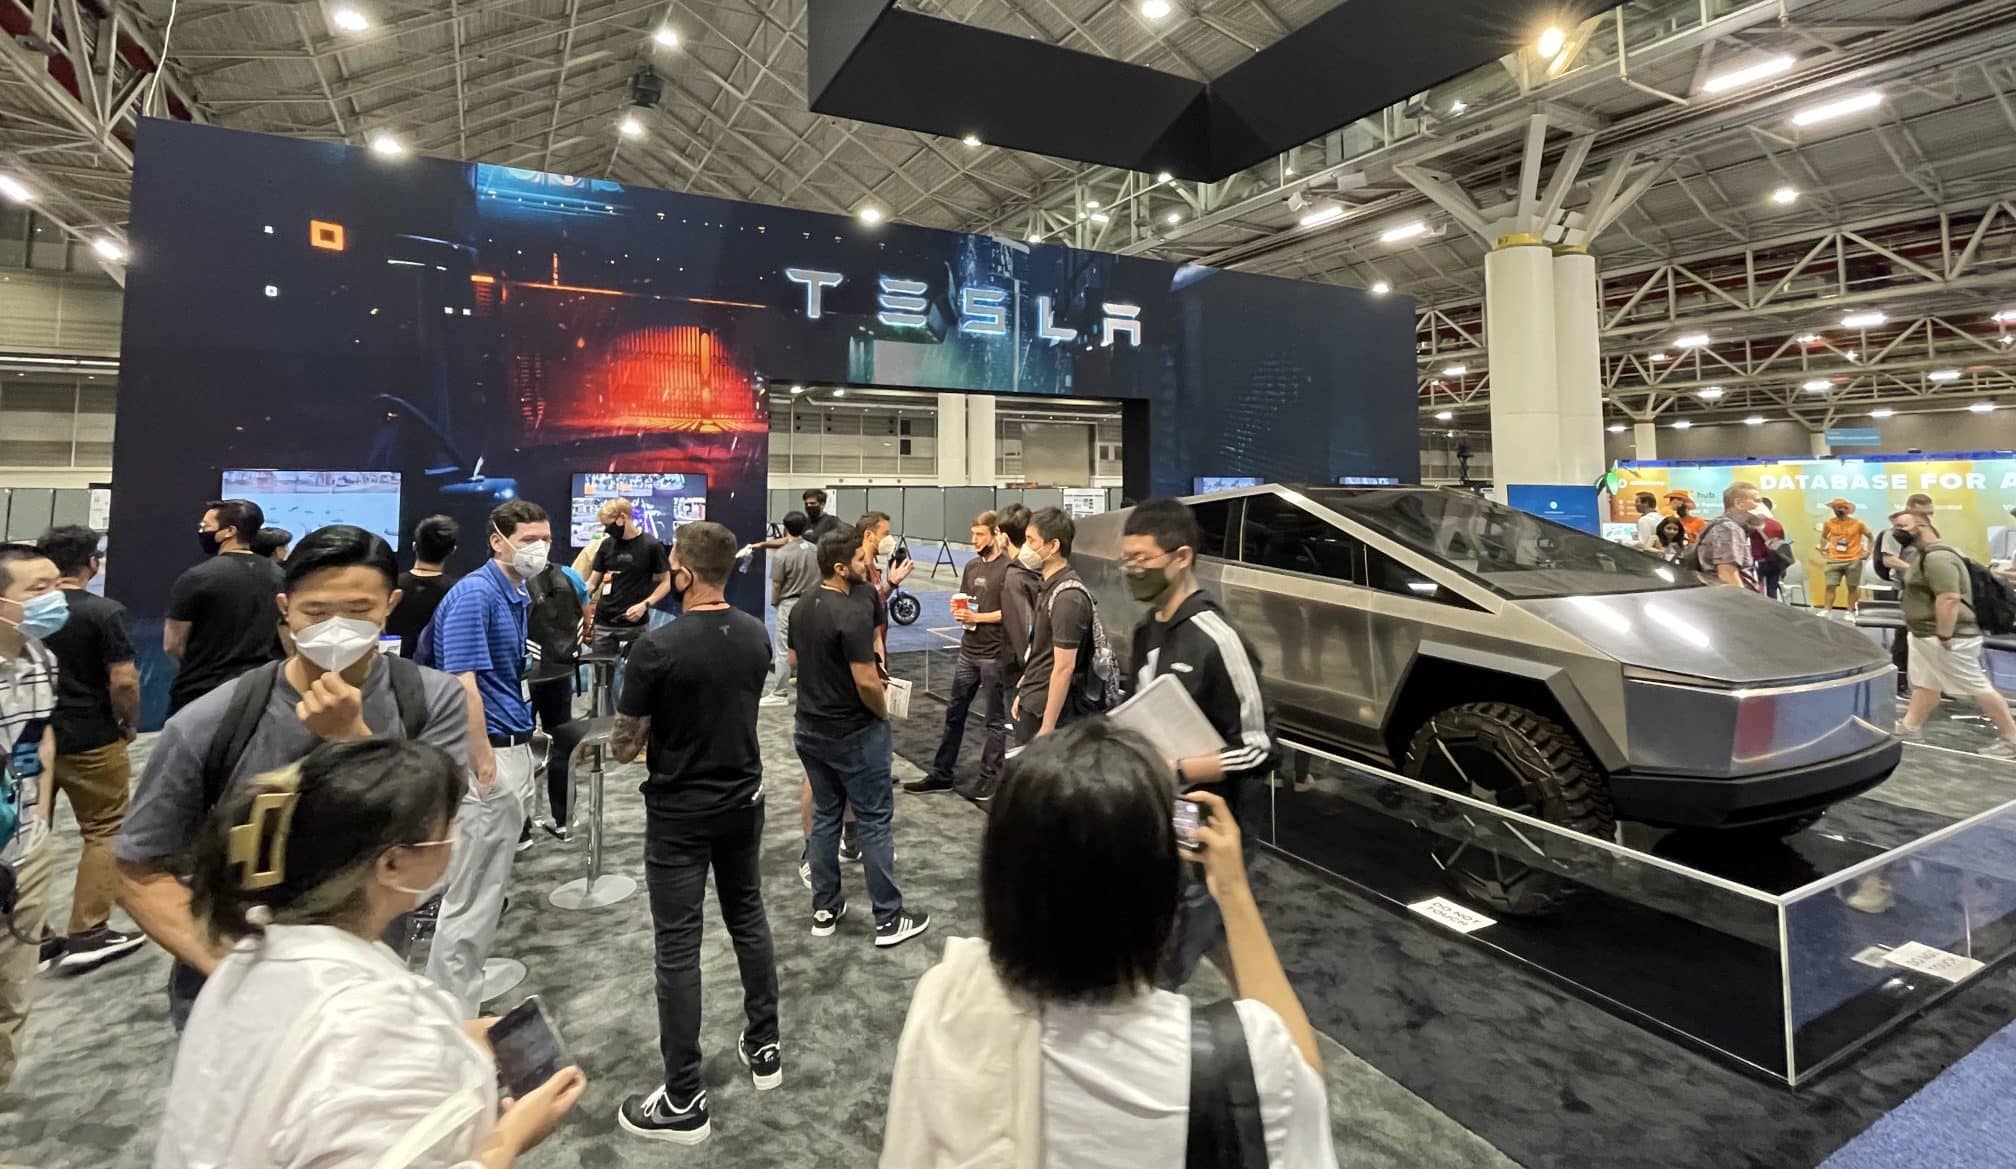 Tesla’s original Cybertruck prototype stuns at CVPR 2022 Conference